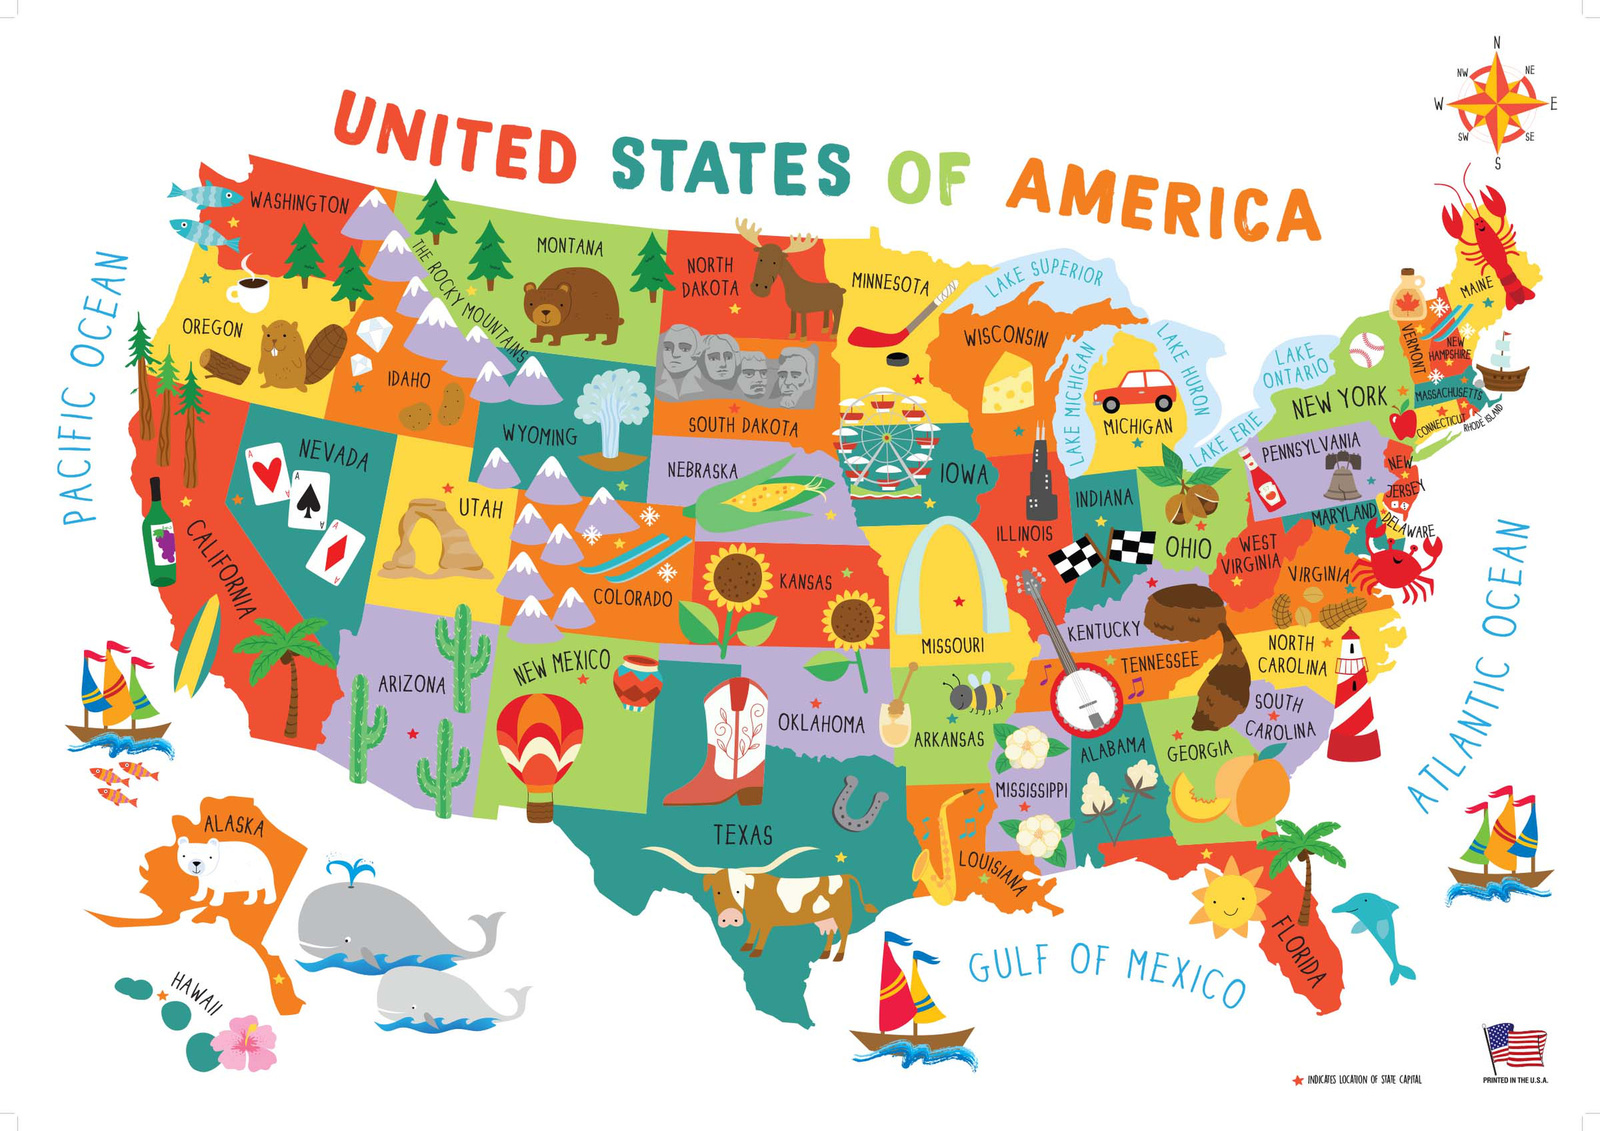 USA MAP_FINAL